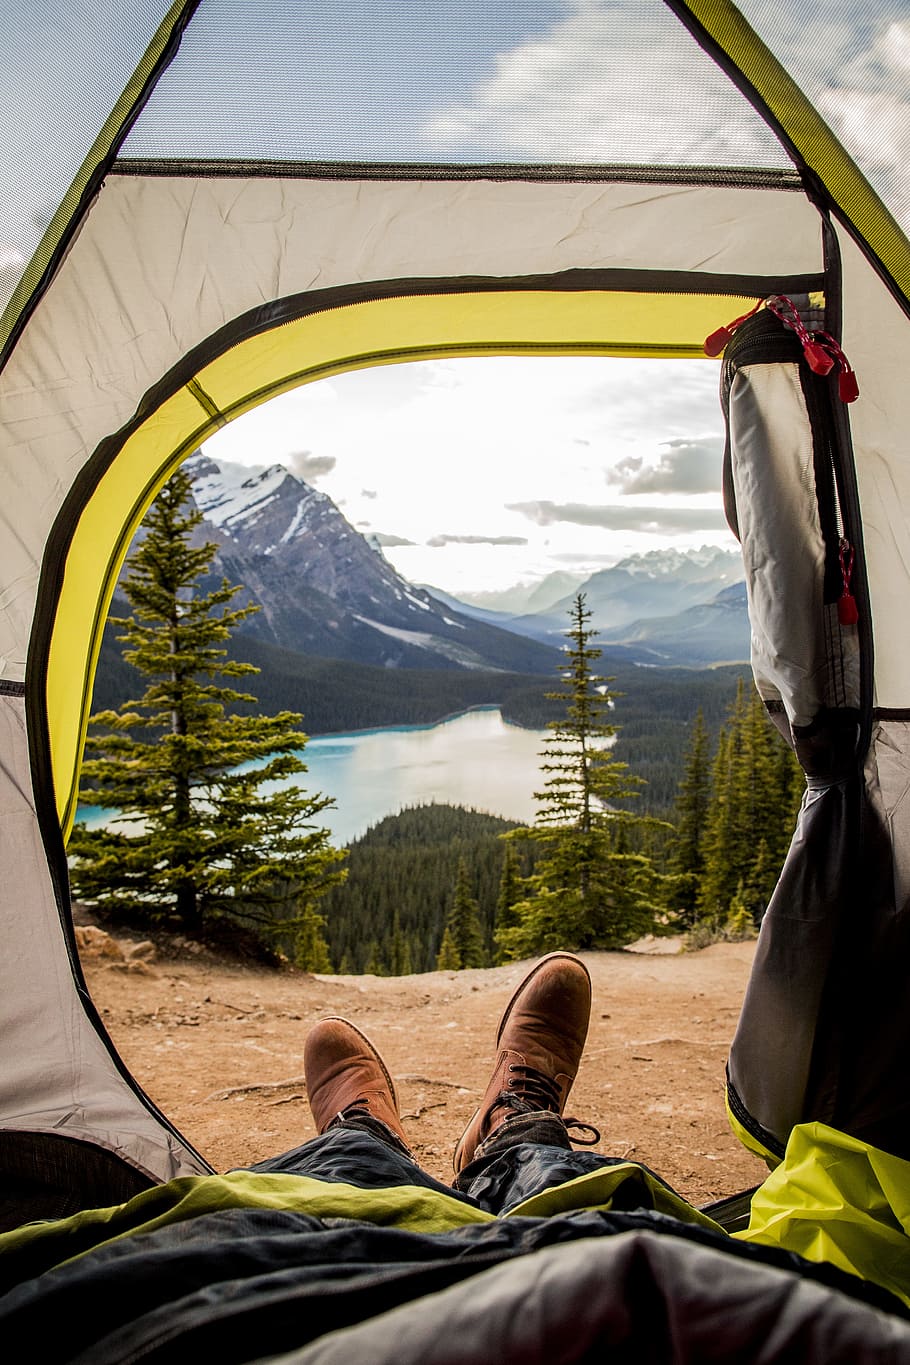 Camping, carpa, al aire libre, viaje, excursionista, caminata, campamento, lago, naturaleza, paisaje